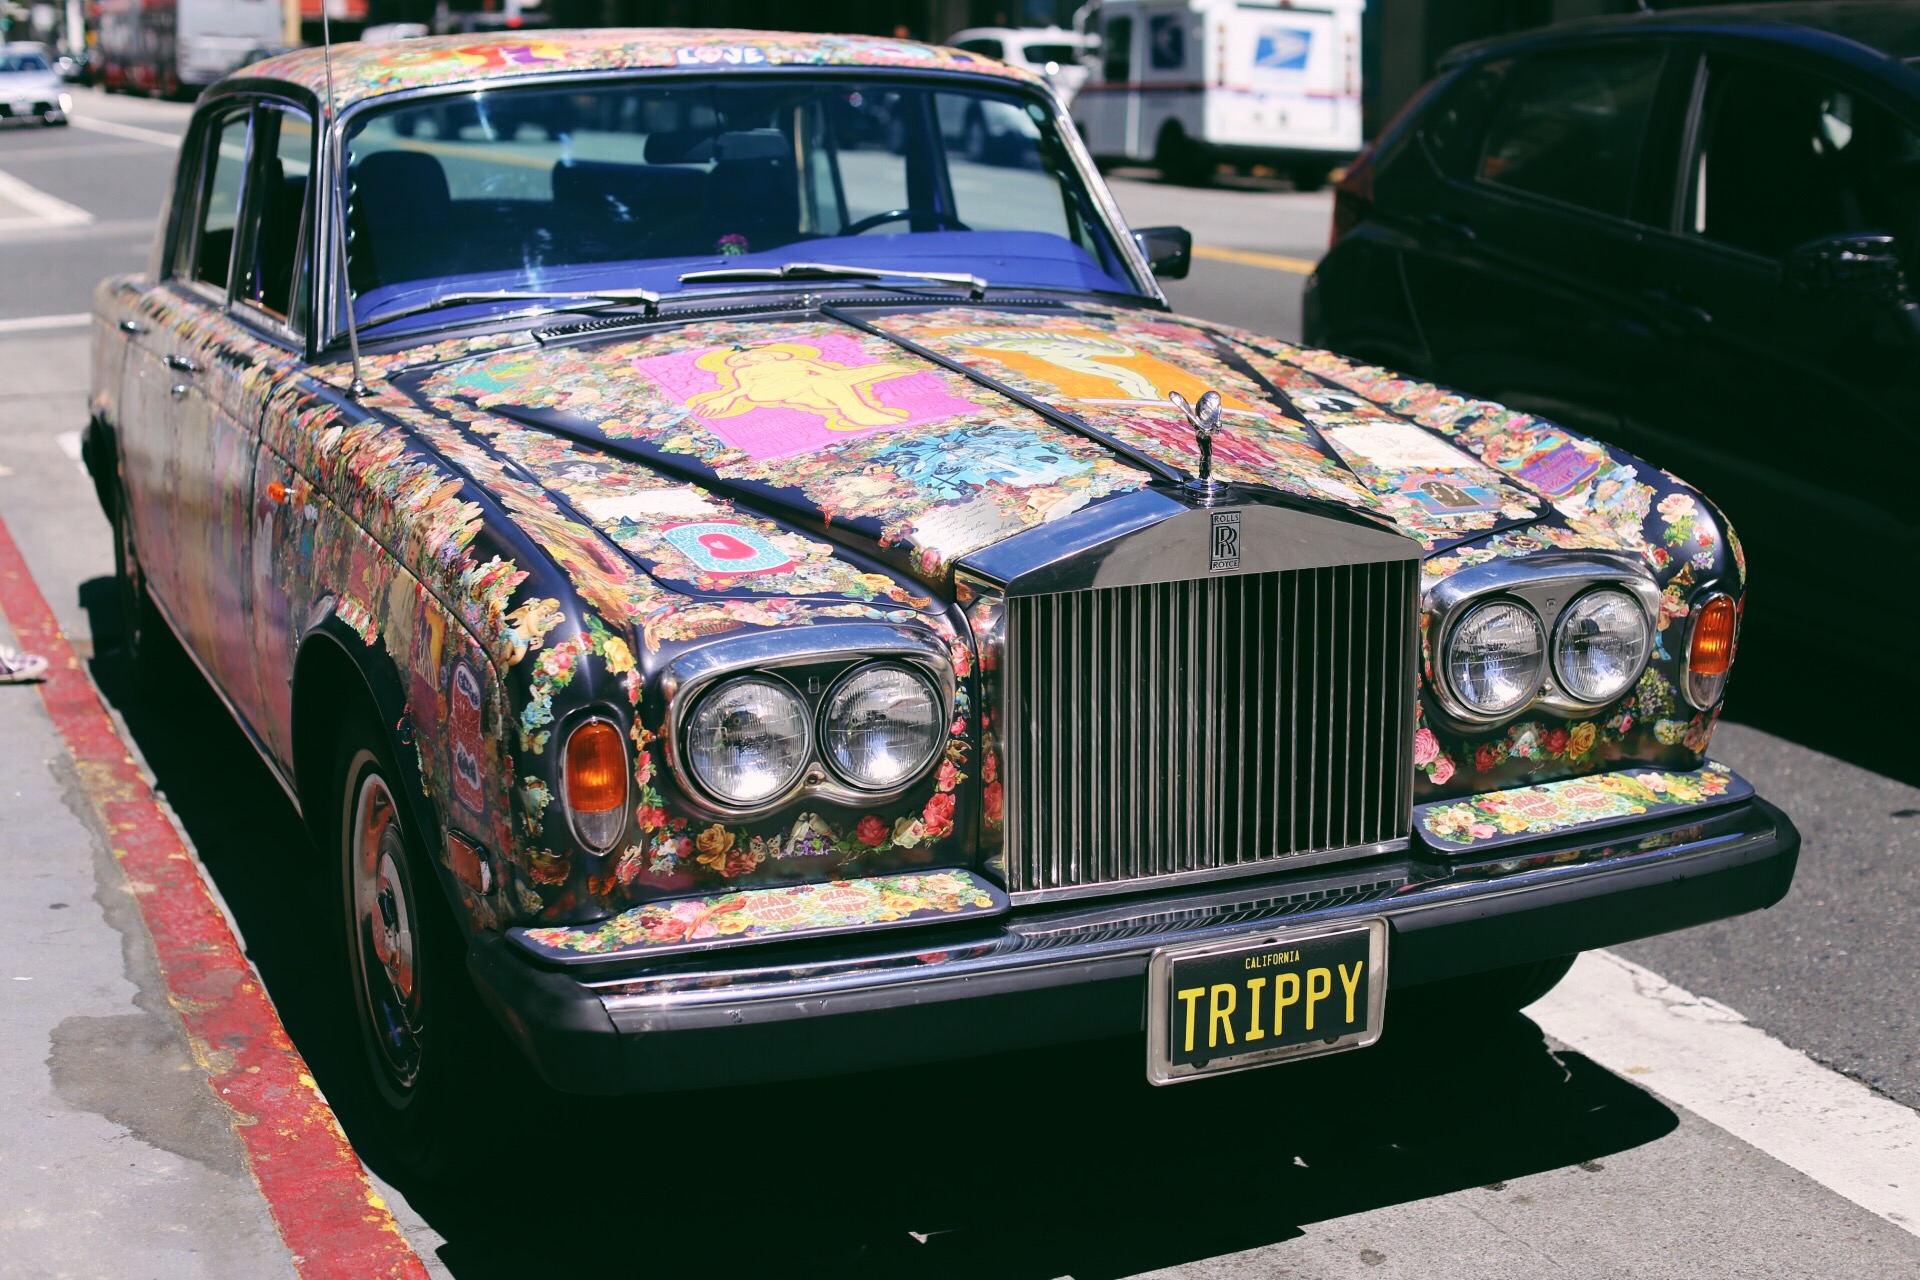 Trippy Summer of Love Car